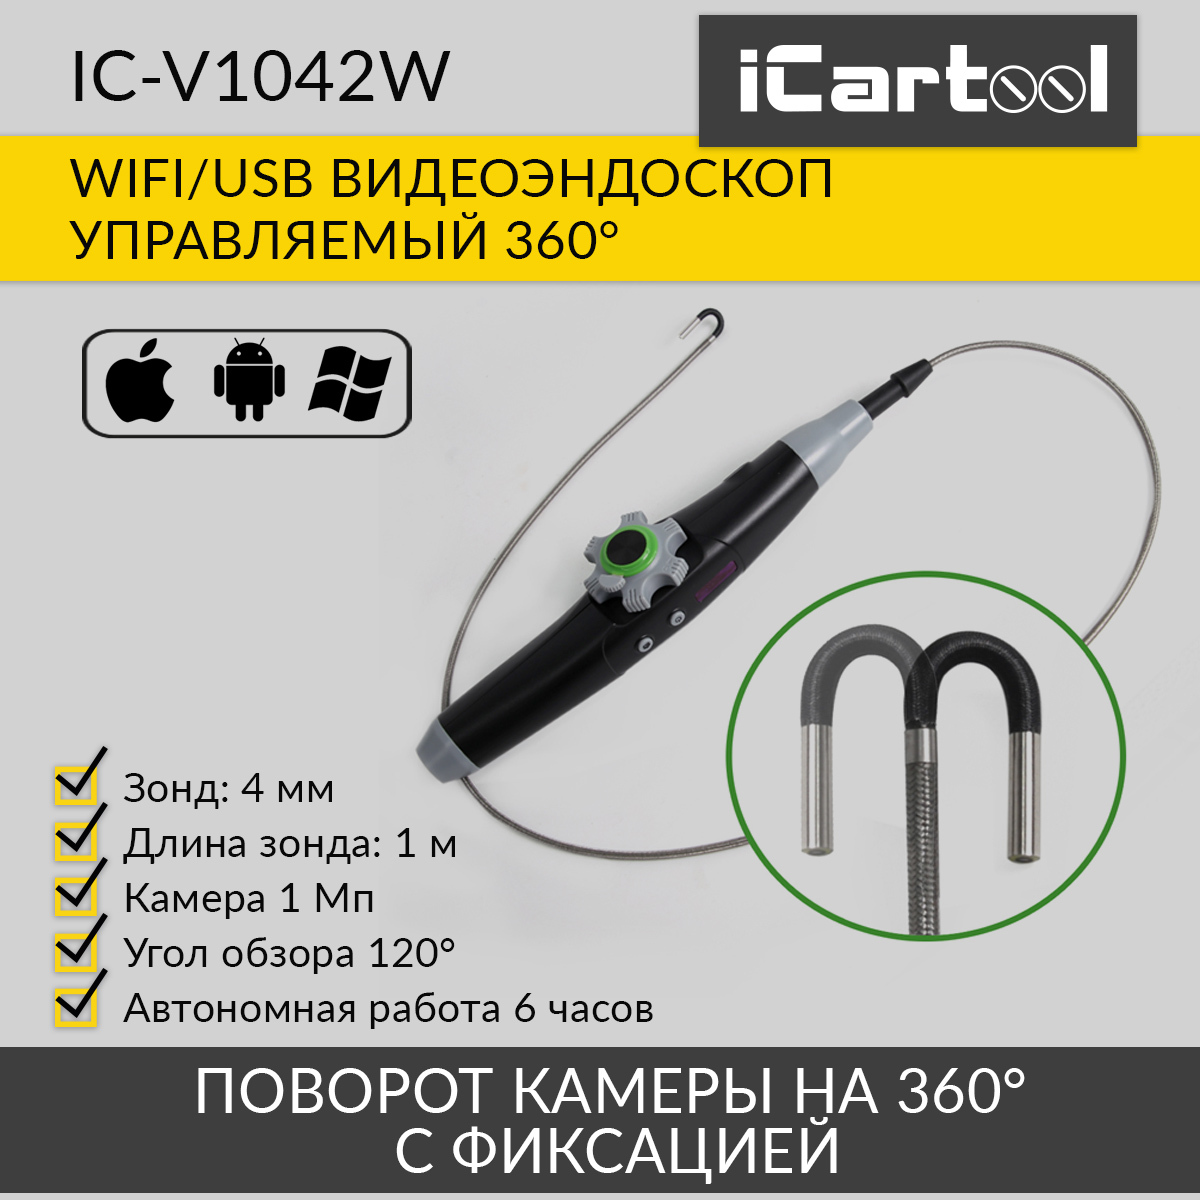 Видеоэндоскоп управляемый iCartool IC-V1042W WIFI/USB, 1Мп, 1168х720, 1м, 4мм зонд, 360° видеоэндоскоп управляемый icartool ic v202 3 5 1мп 1280x720 1м 6мм 360°